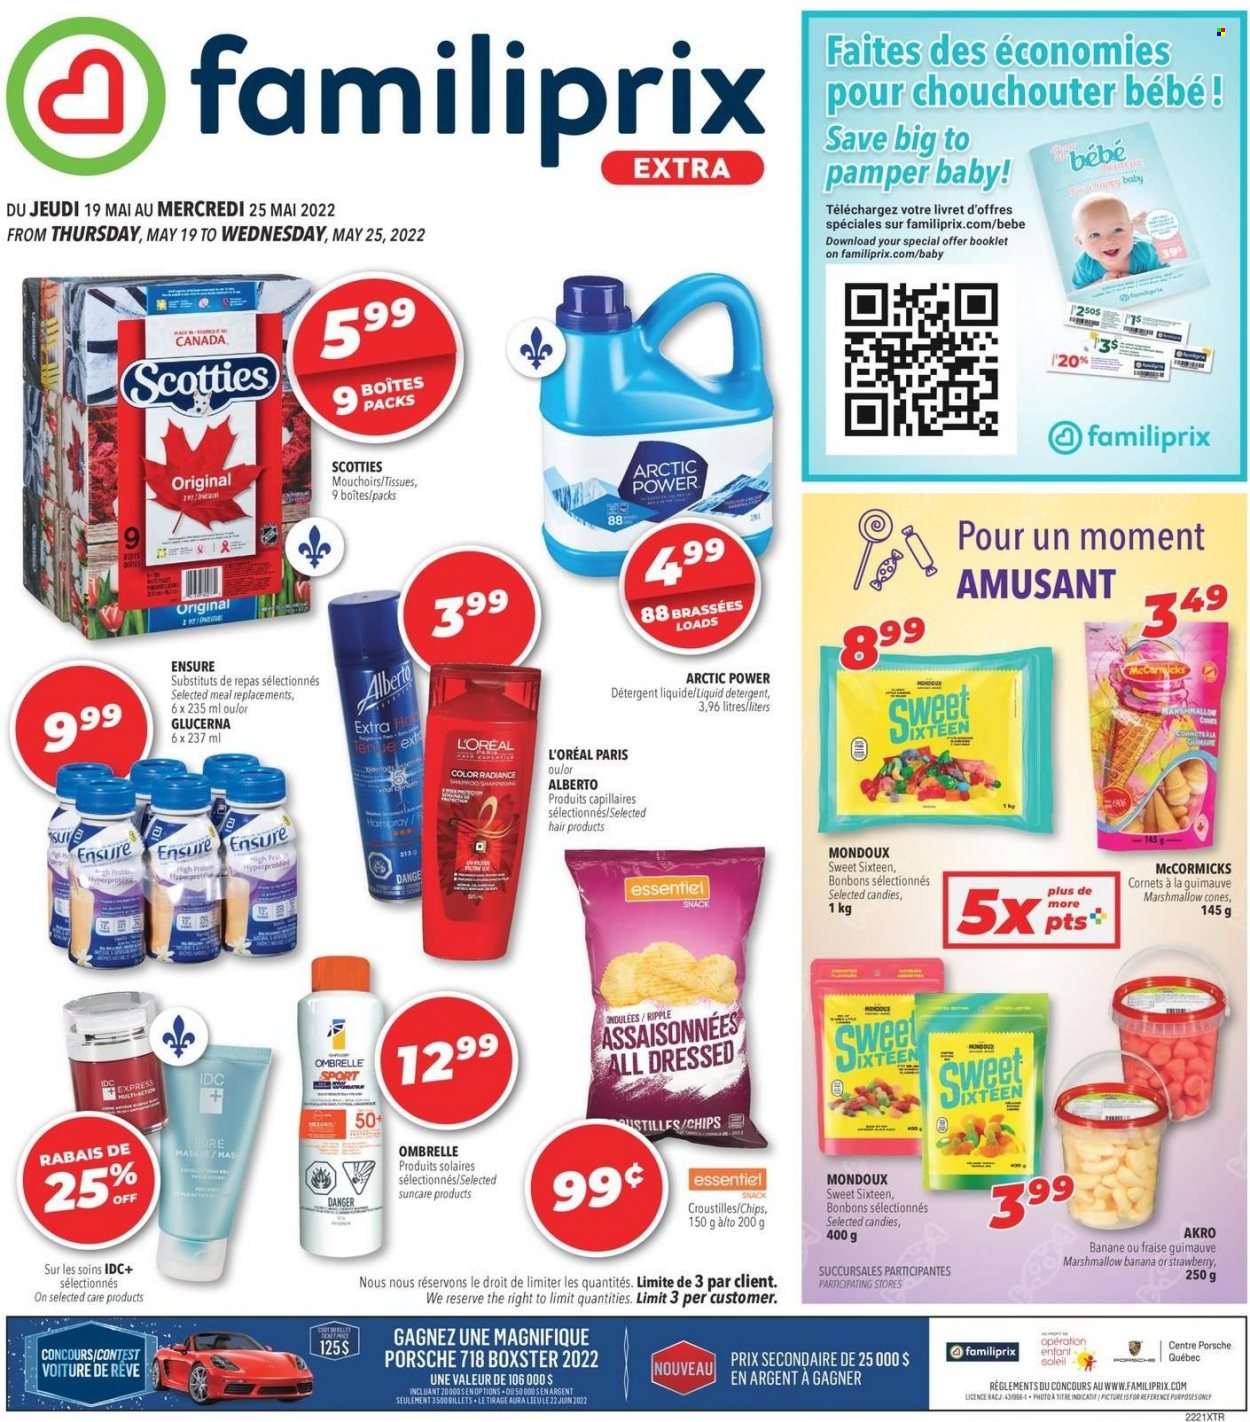 Familiprix Extra flyer  - May 19, 2022 - May 25, 2022.